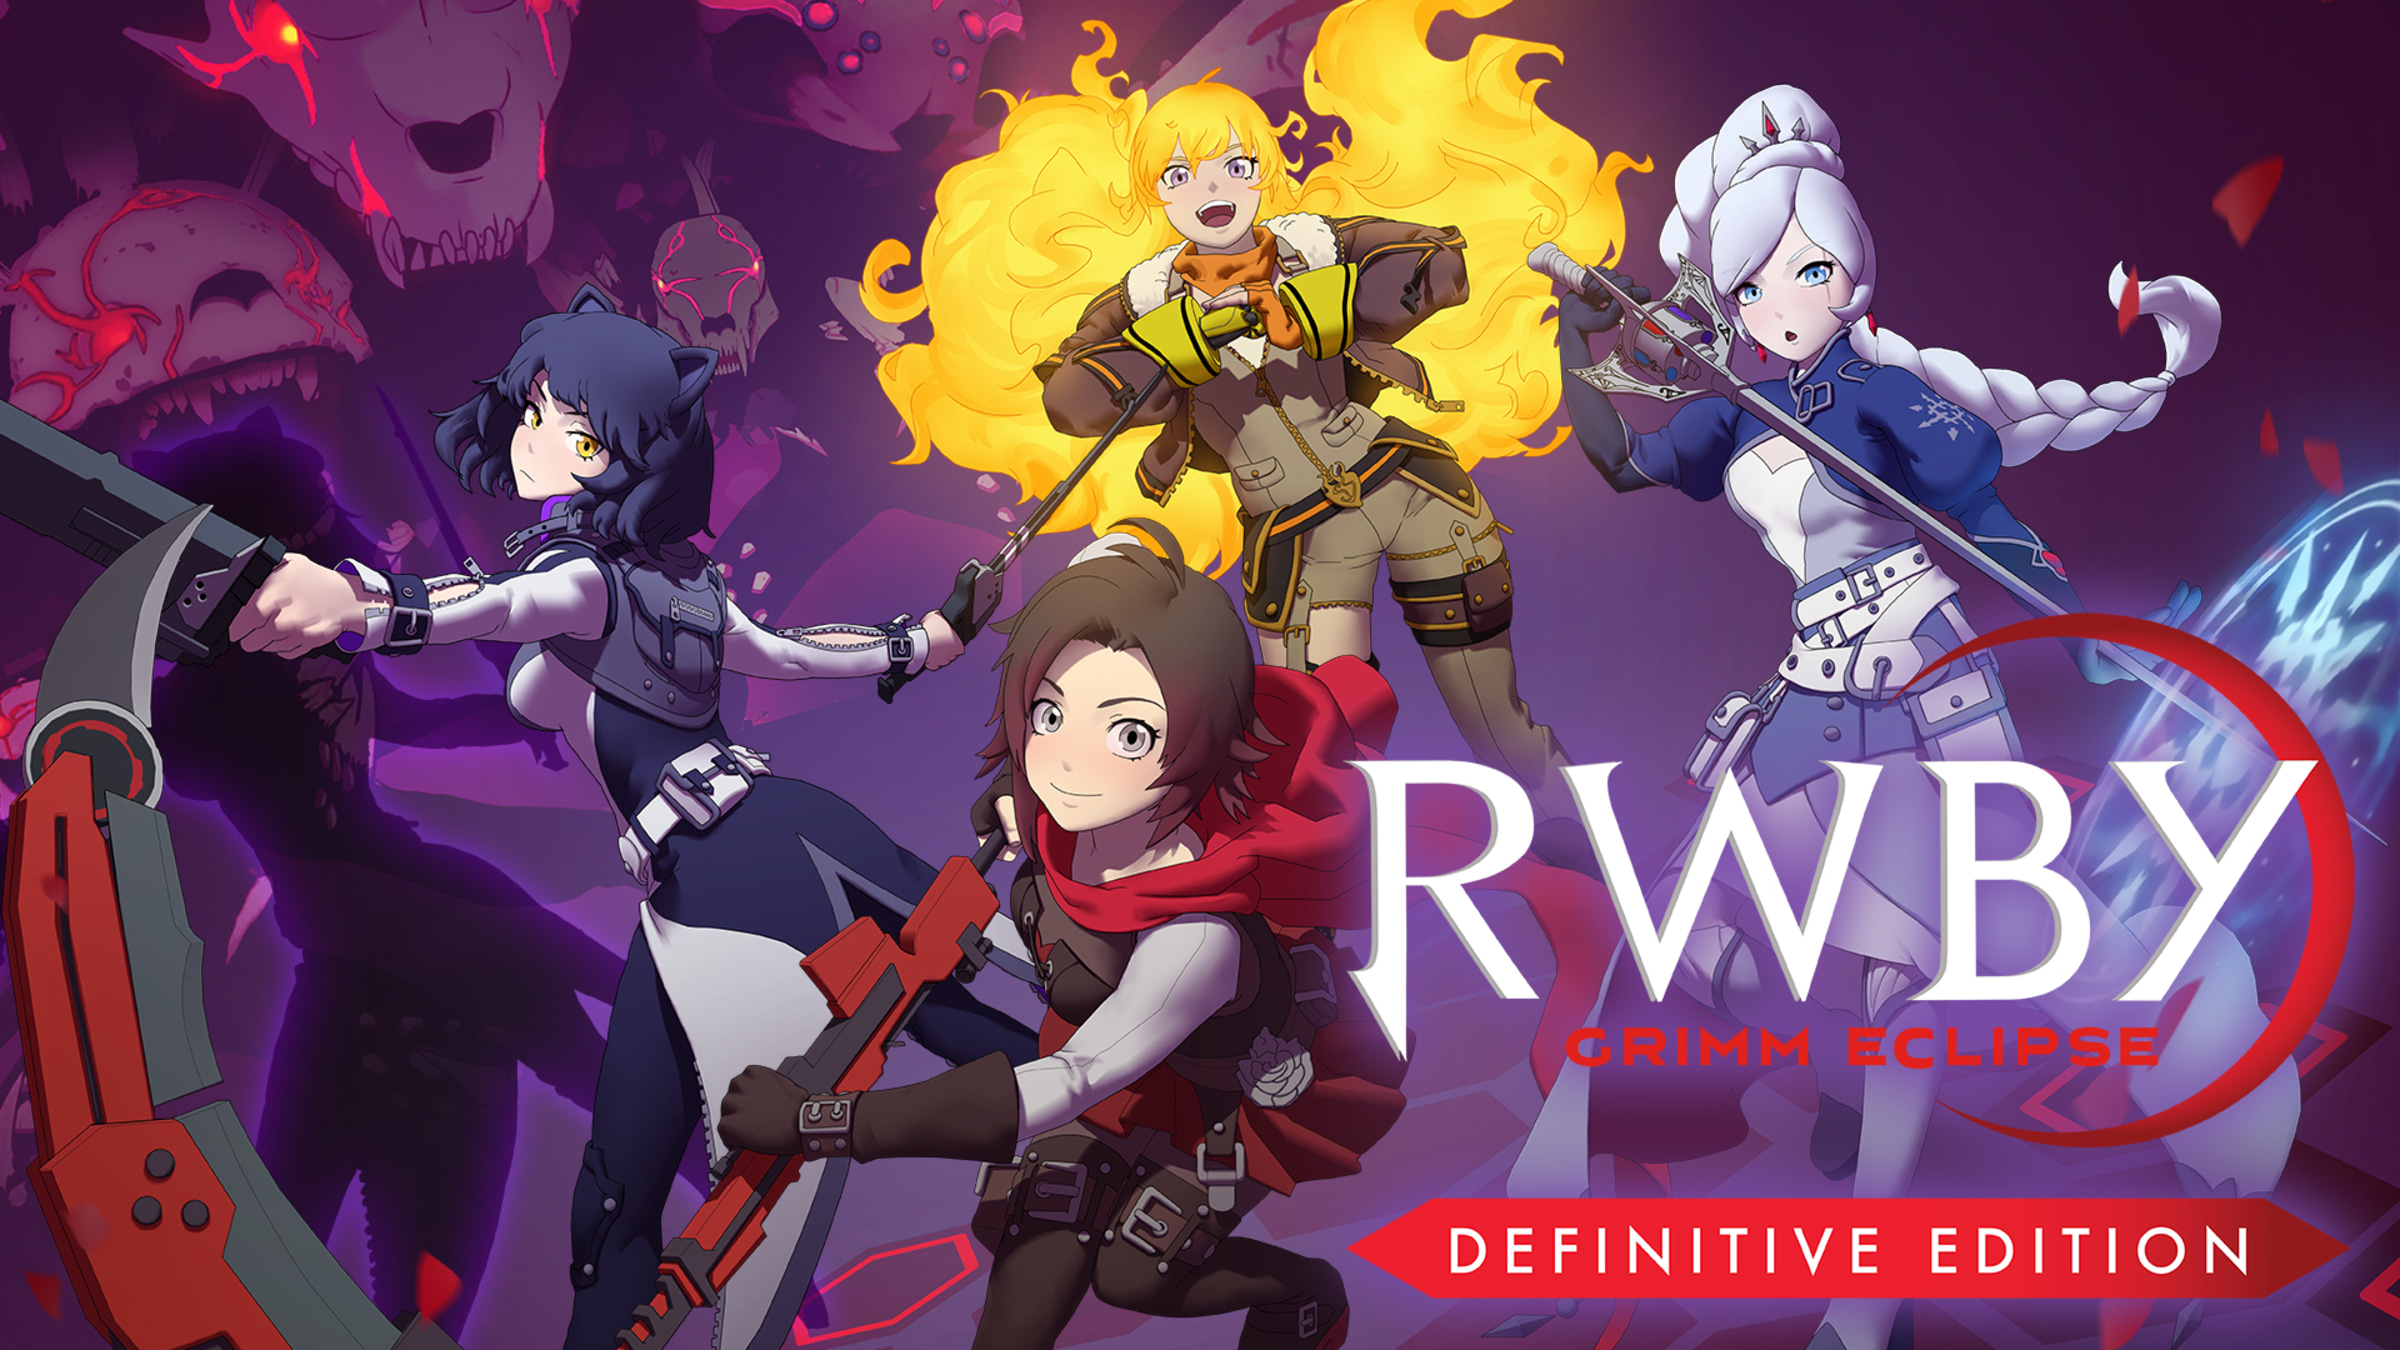 RWBY: Grimm Eclipse Definitive Edition (Nintendo Switch Digital Download) $7.49